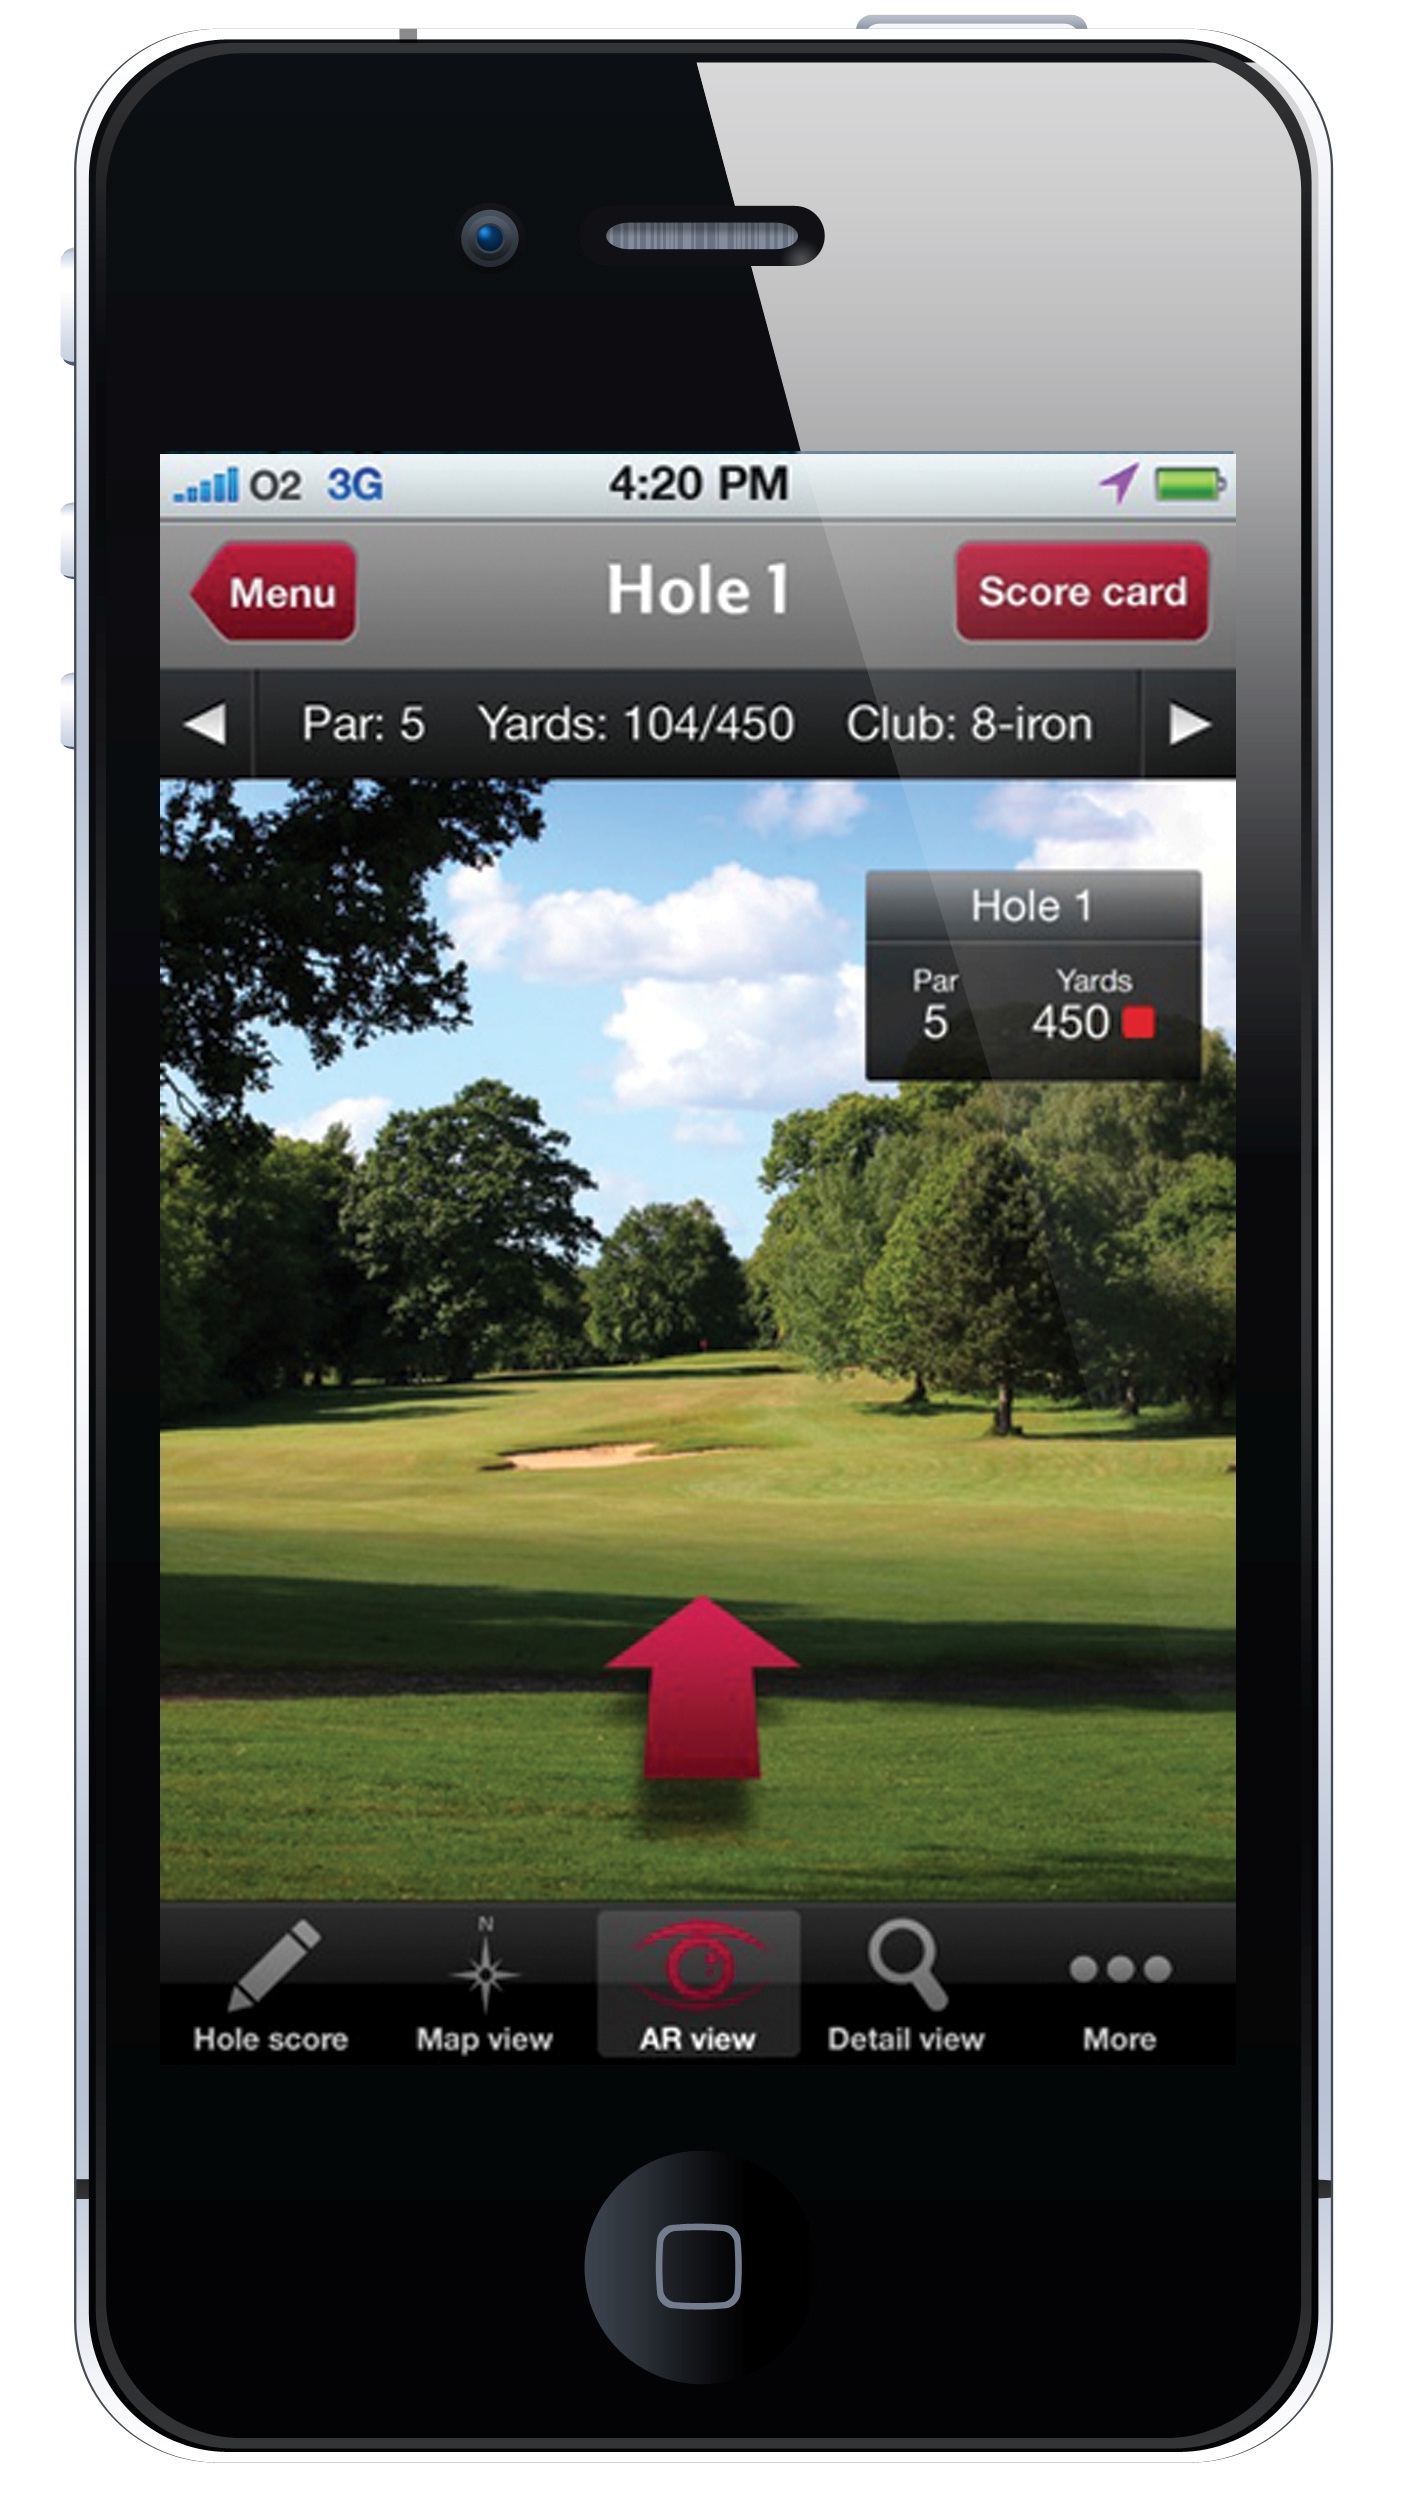 Marriott Golf launches new app